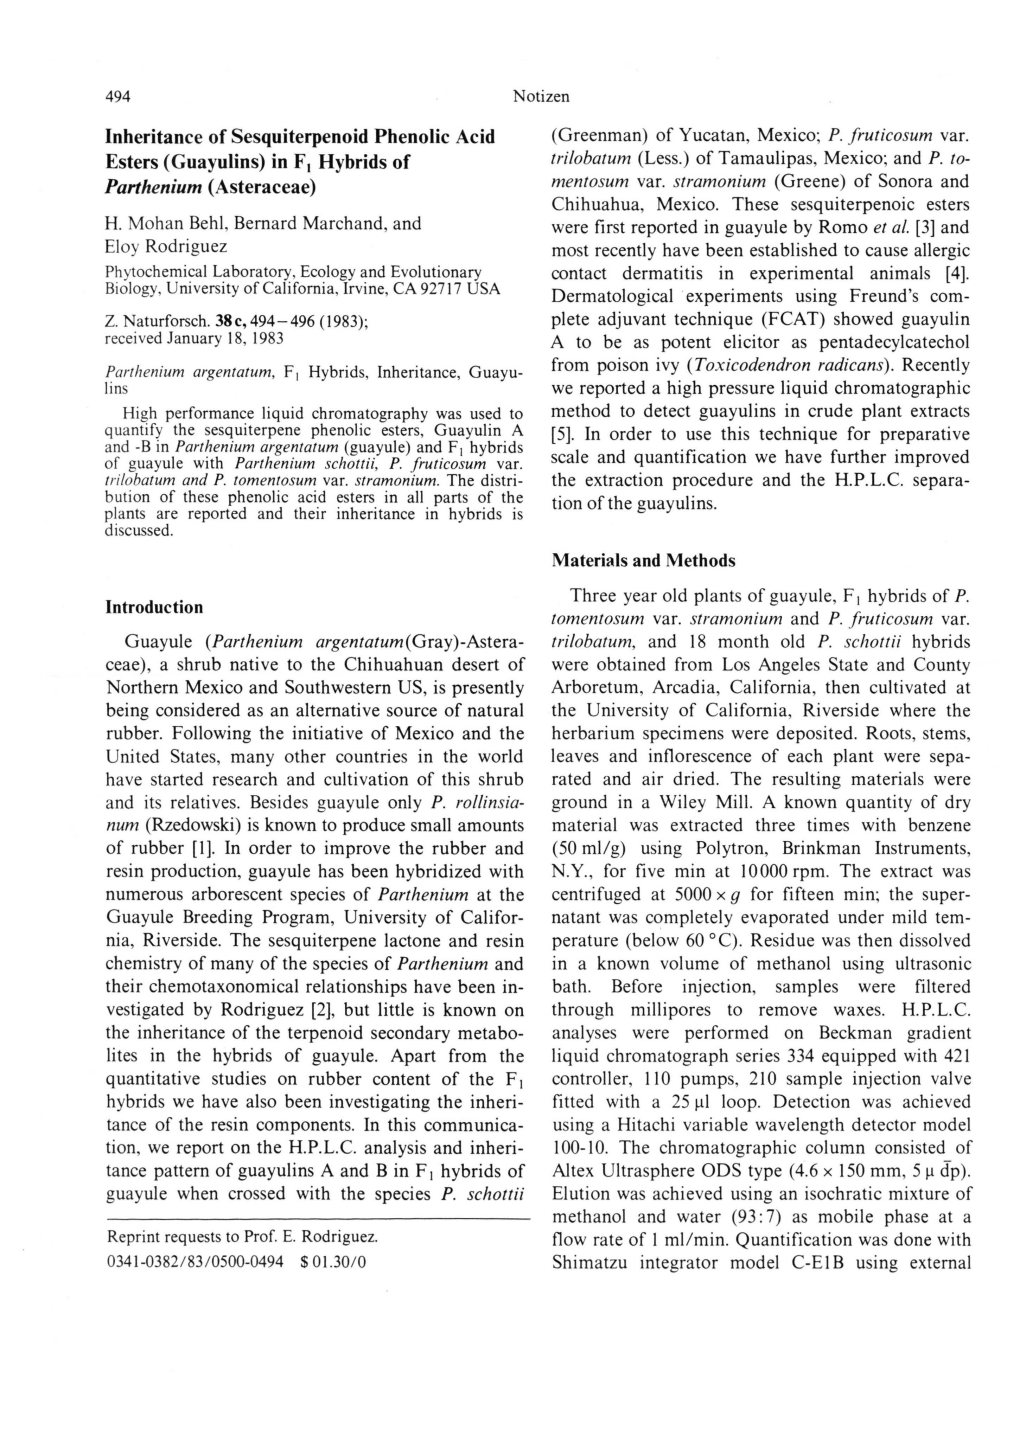 Inheritance of Sesquiterpenoid Phenolic Acid Esters (Guayulins) In